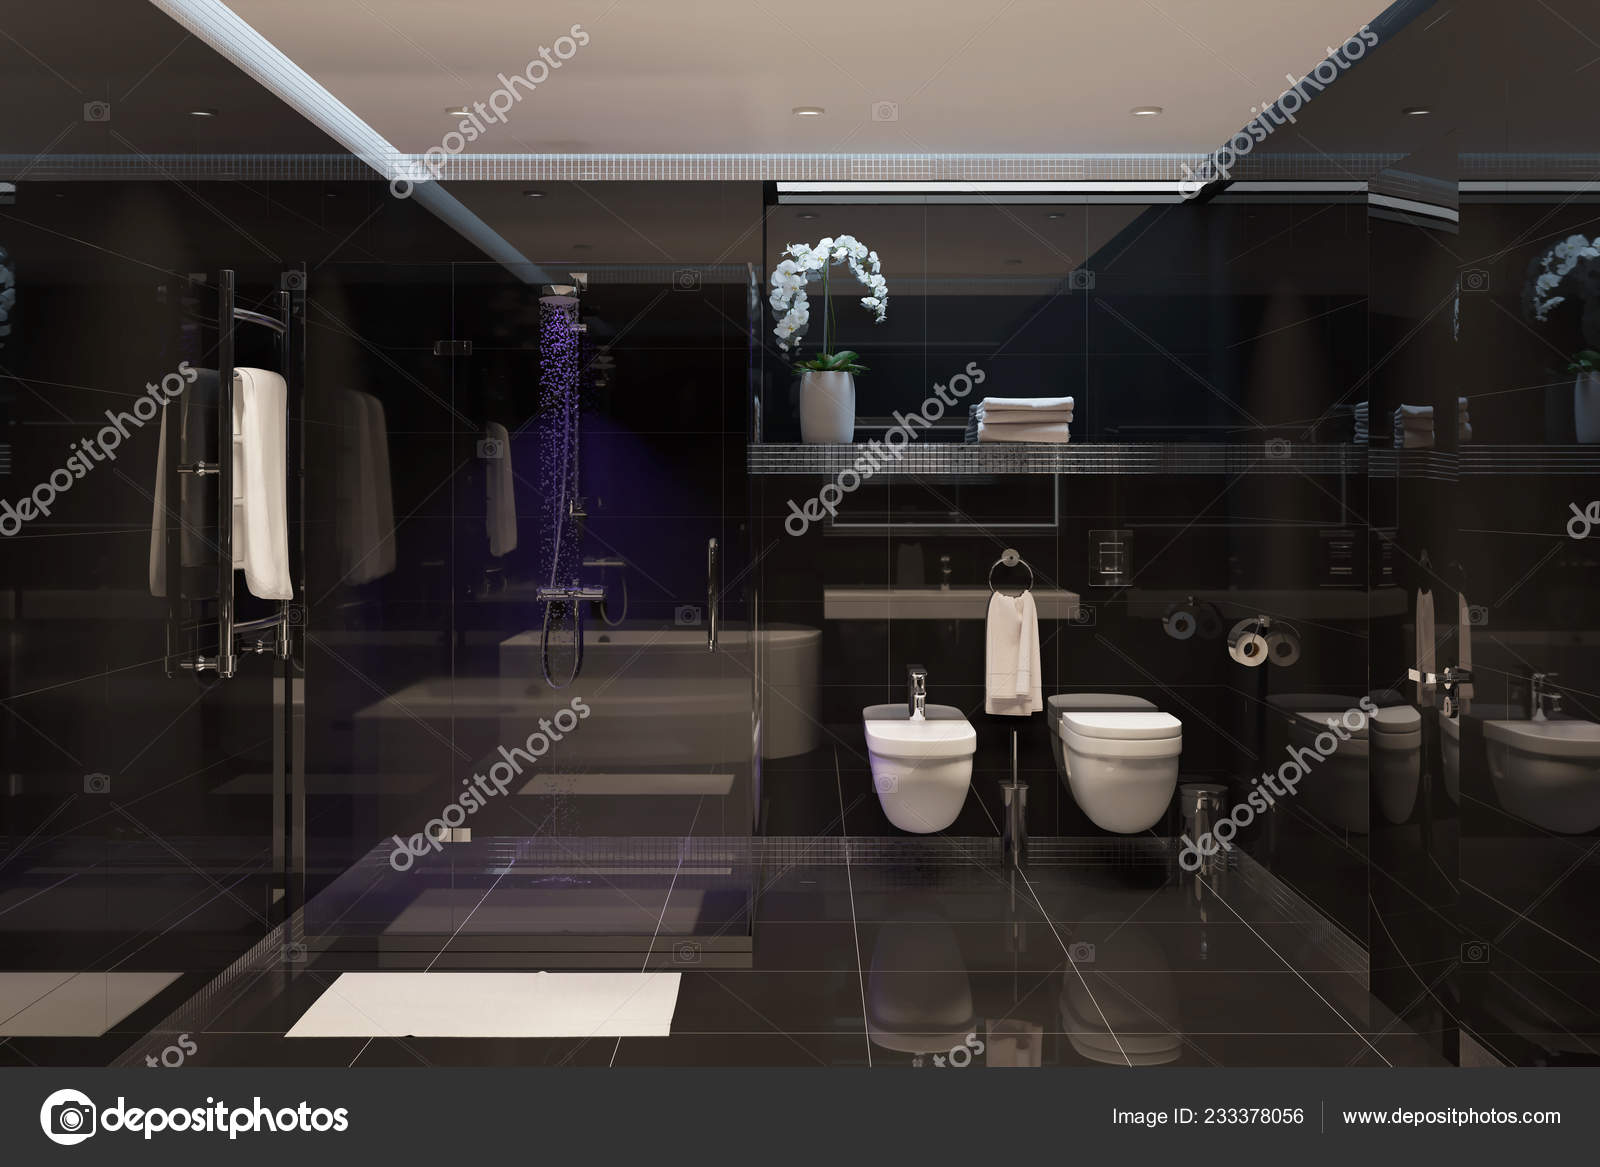 depositphotos_233378056-stock-photo-illustration-black-modern-shower-room